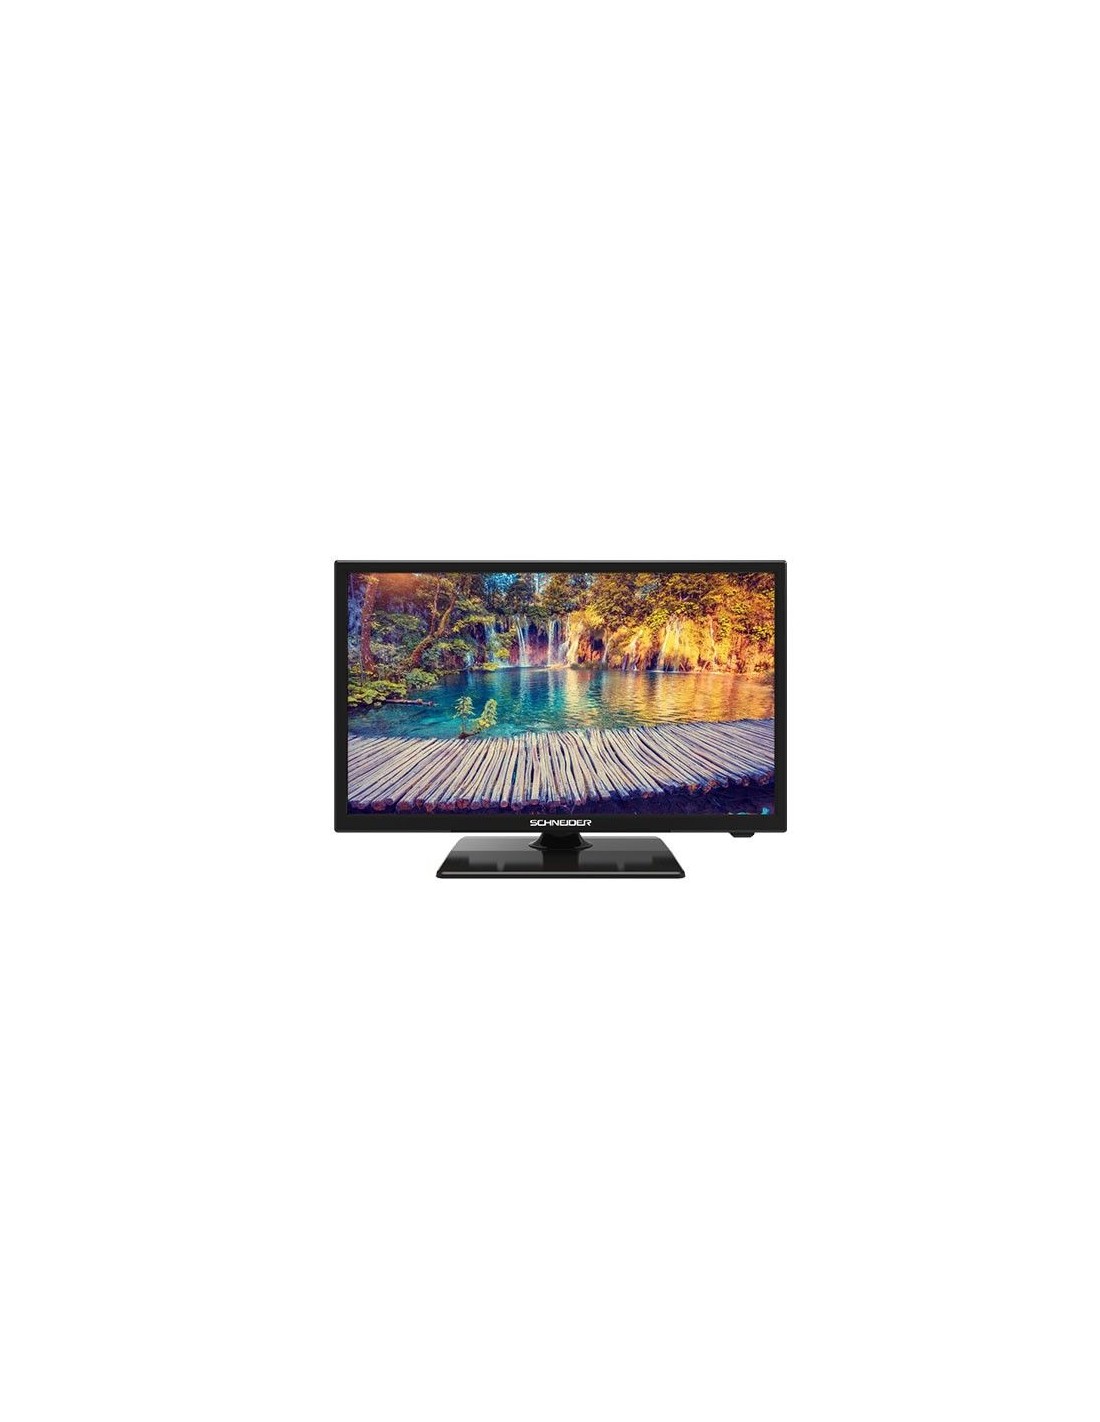 SCHNEIDER CONSUMER TV 22 LED HD USB DVR 12V HDMI Negra 55,9 cm